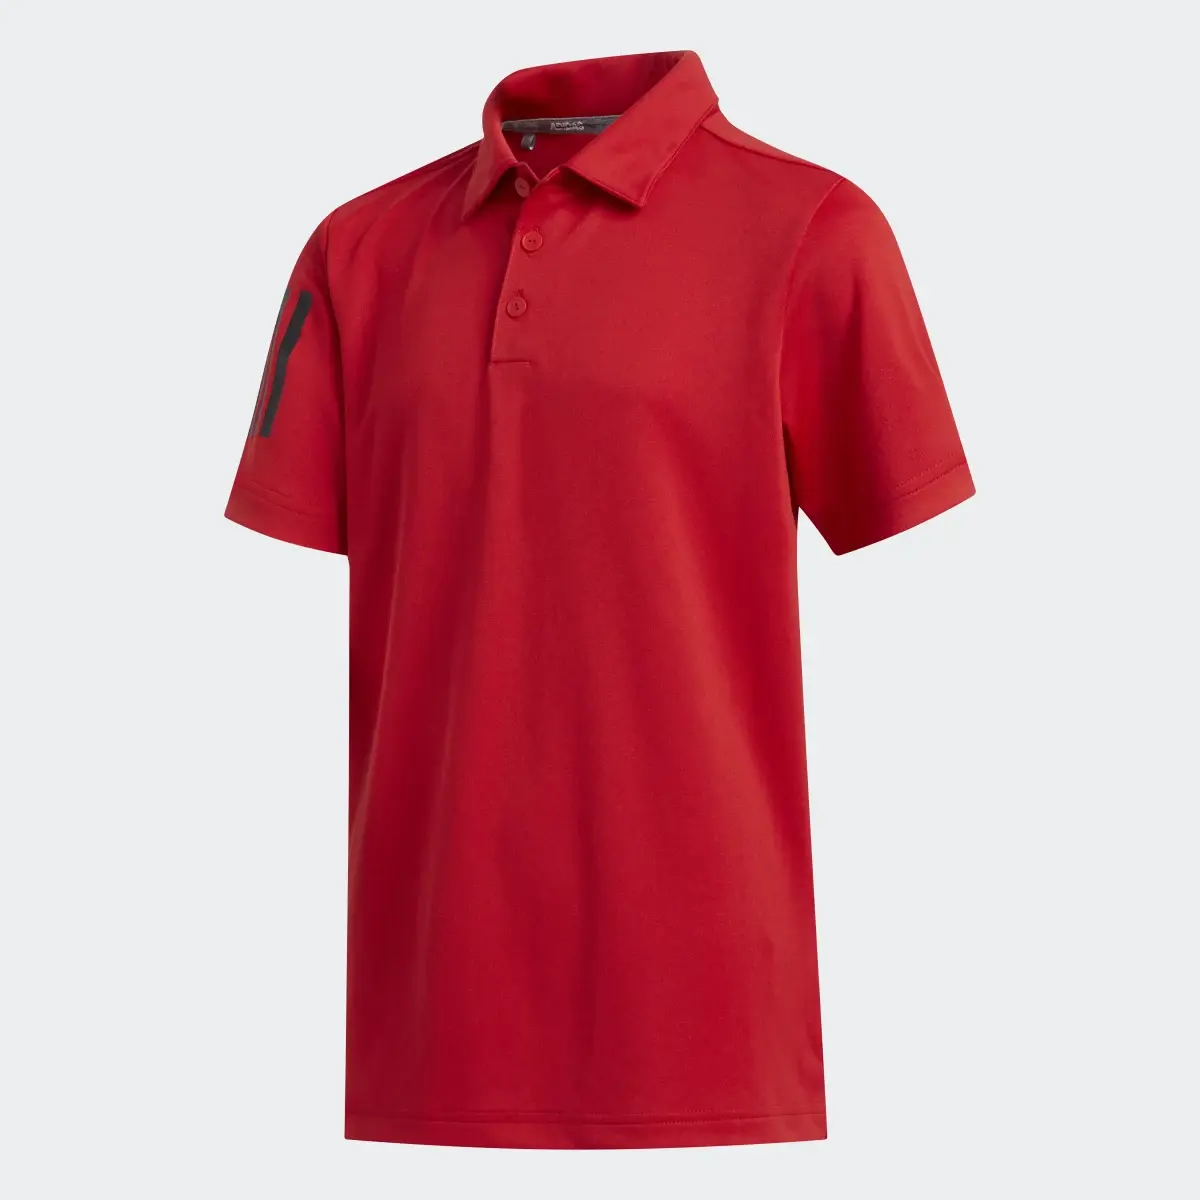 Adidas 3-Stripes Polo Shirt. 1